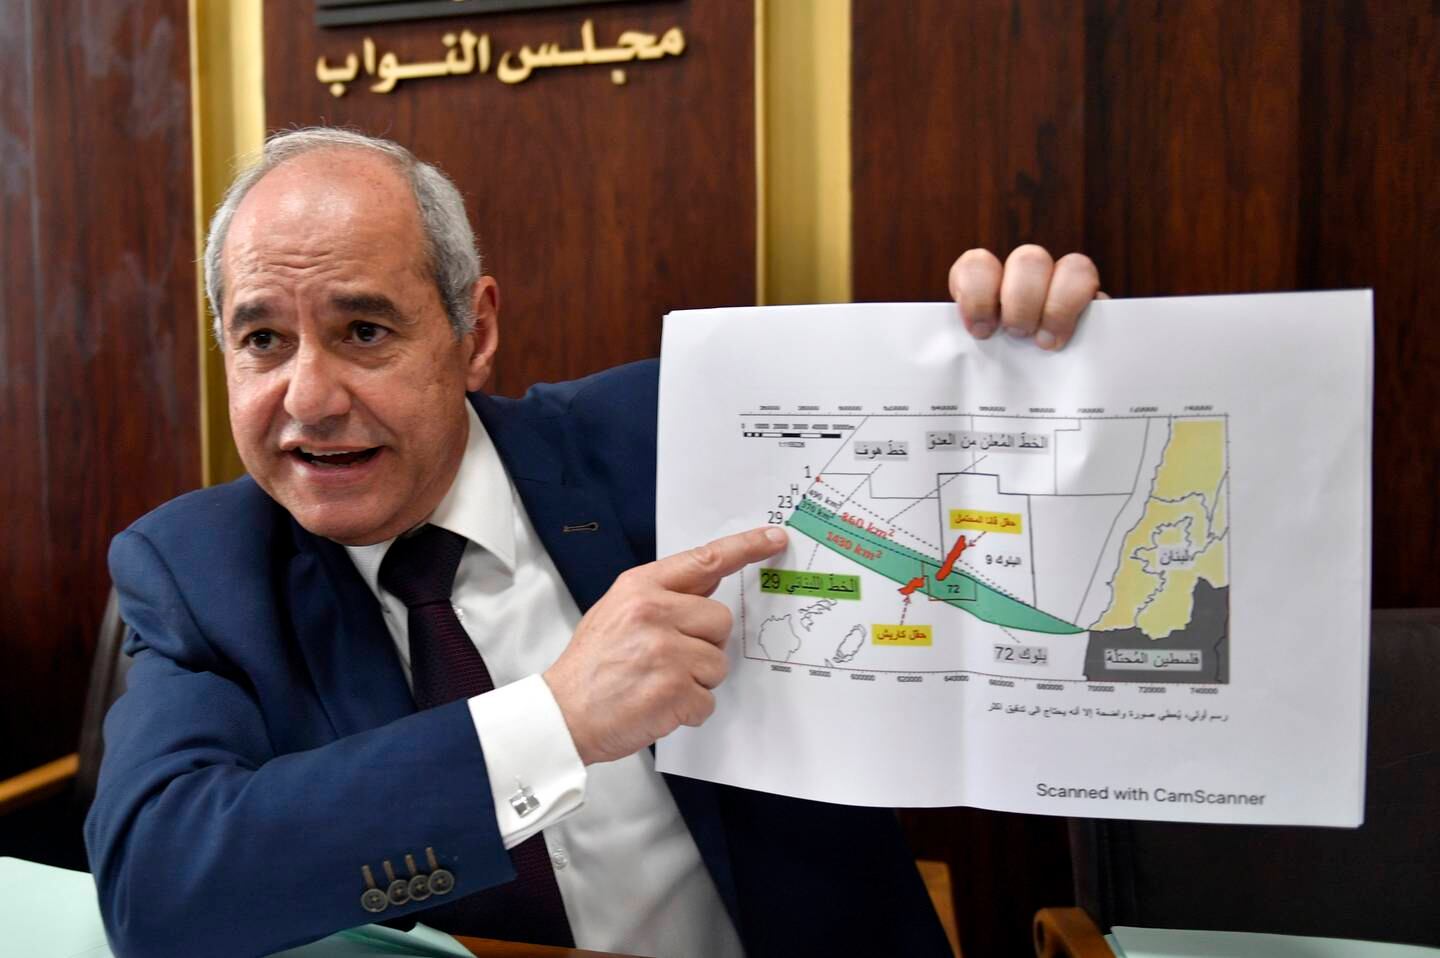 Lebanese MP Melhem Khalaf says Israel's drilling threatens Lebanon's rights. Photo: EPA